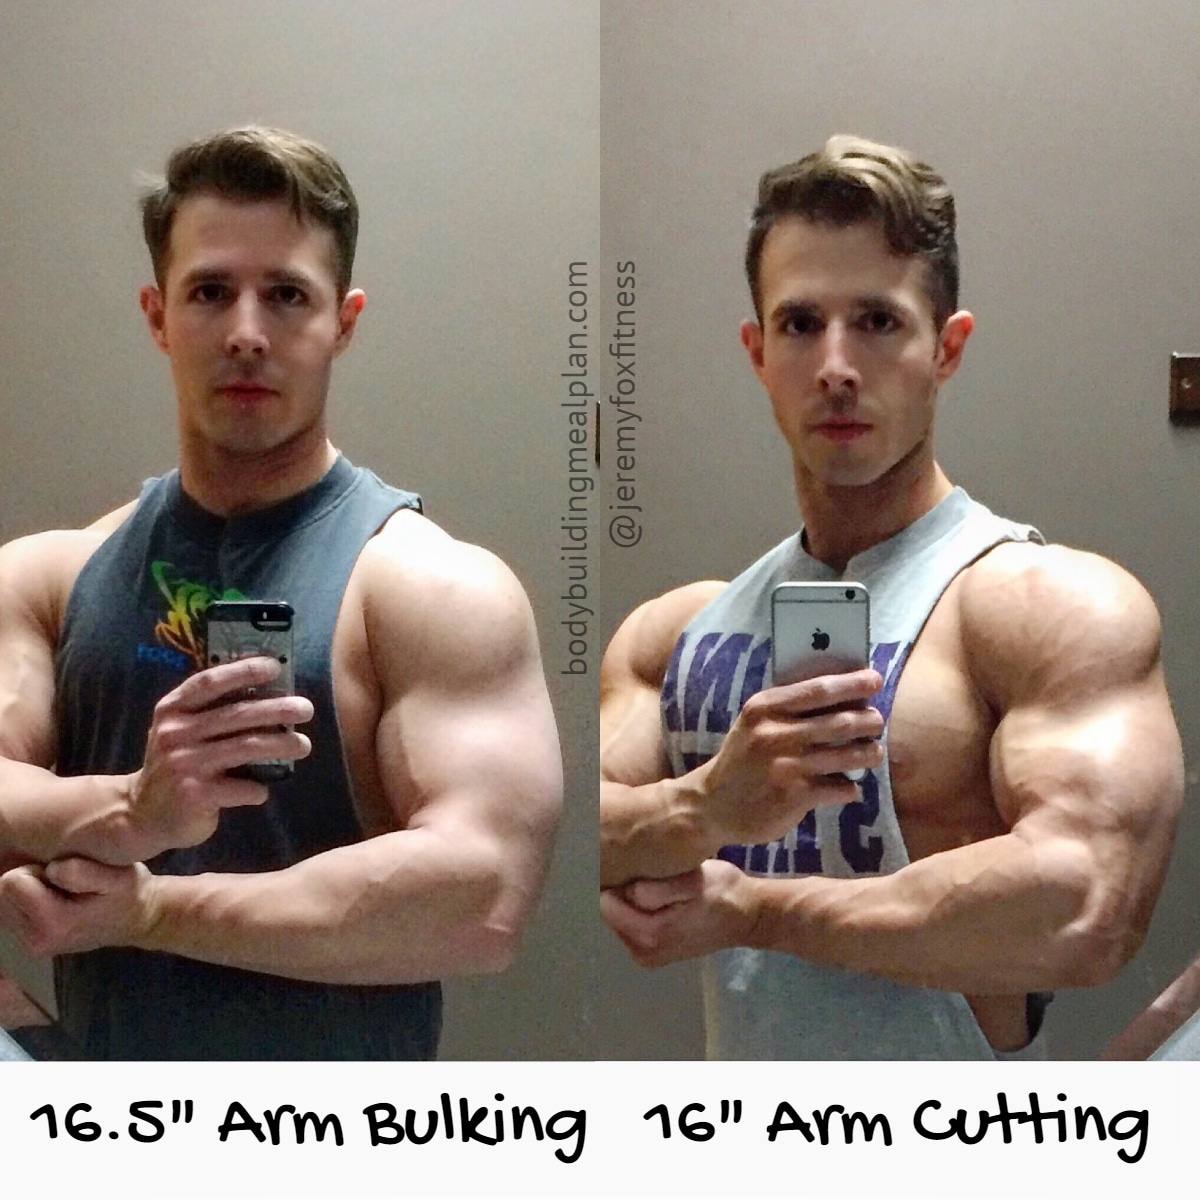 18 Inch Arms Bulk vs Cut